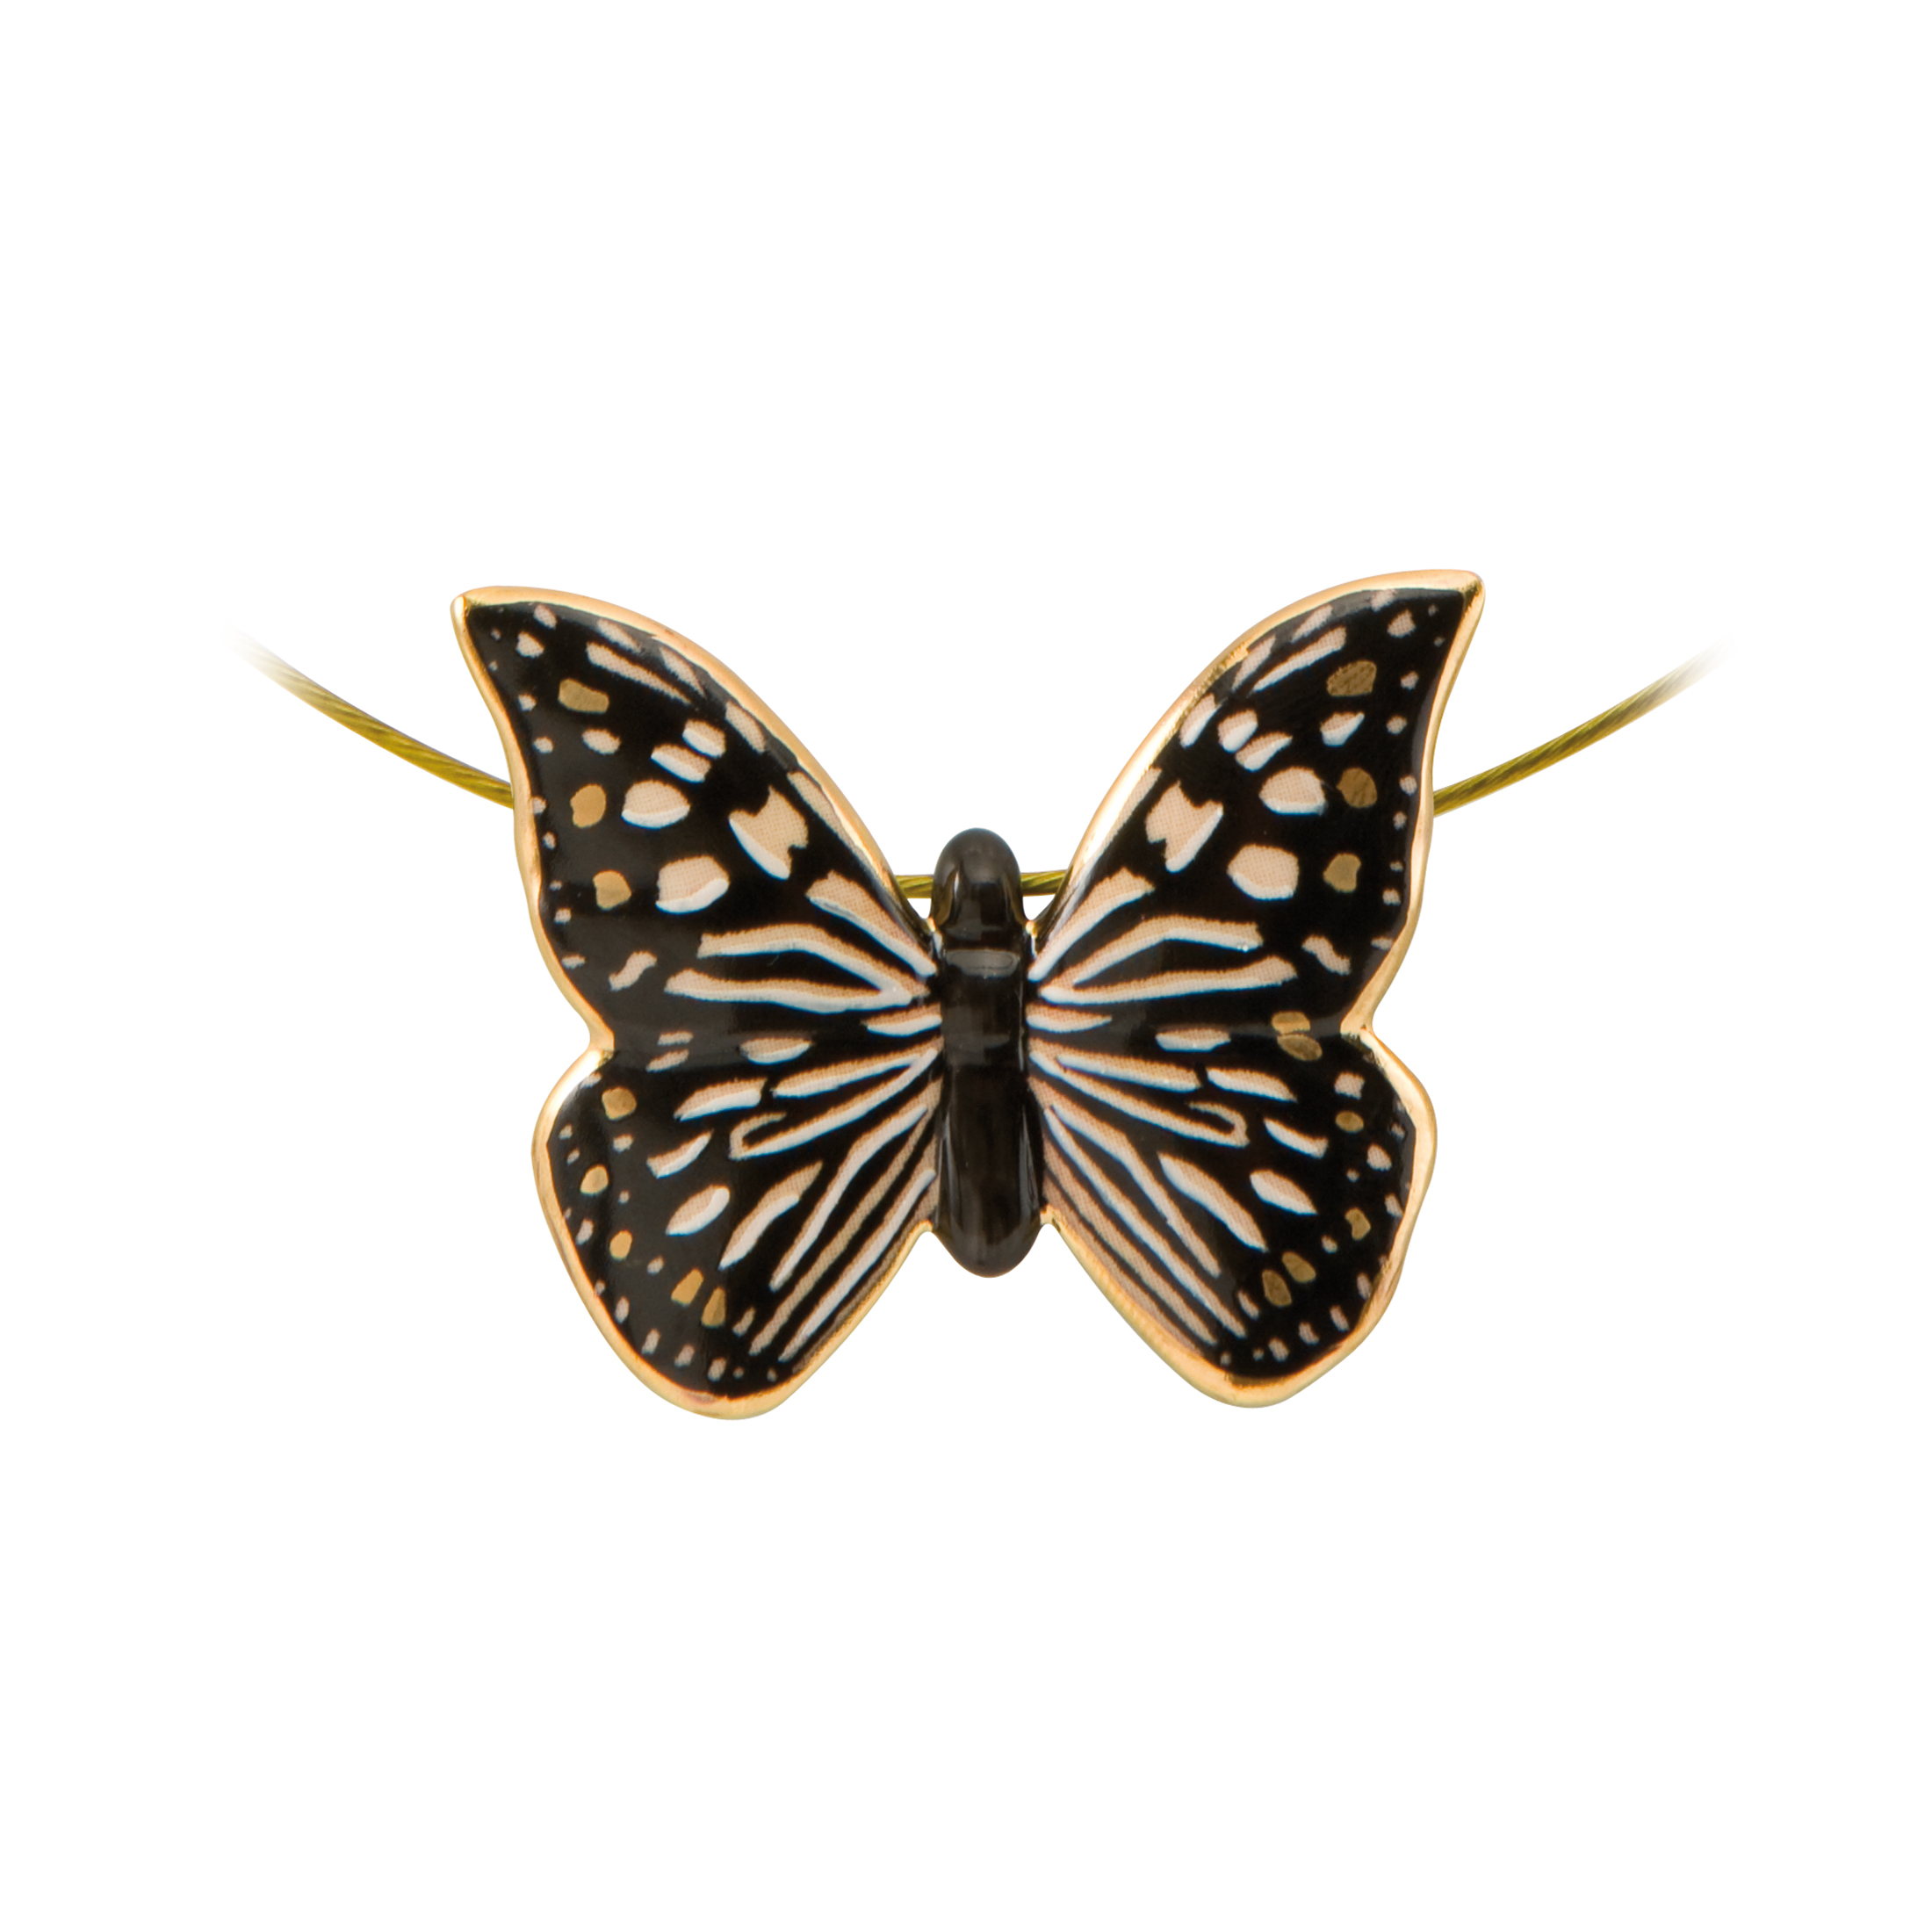 Goebel - Reif mit Amulett - Butterfly Black-White - Artis Orbis Joanna Charlotte